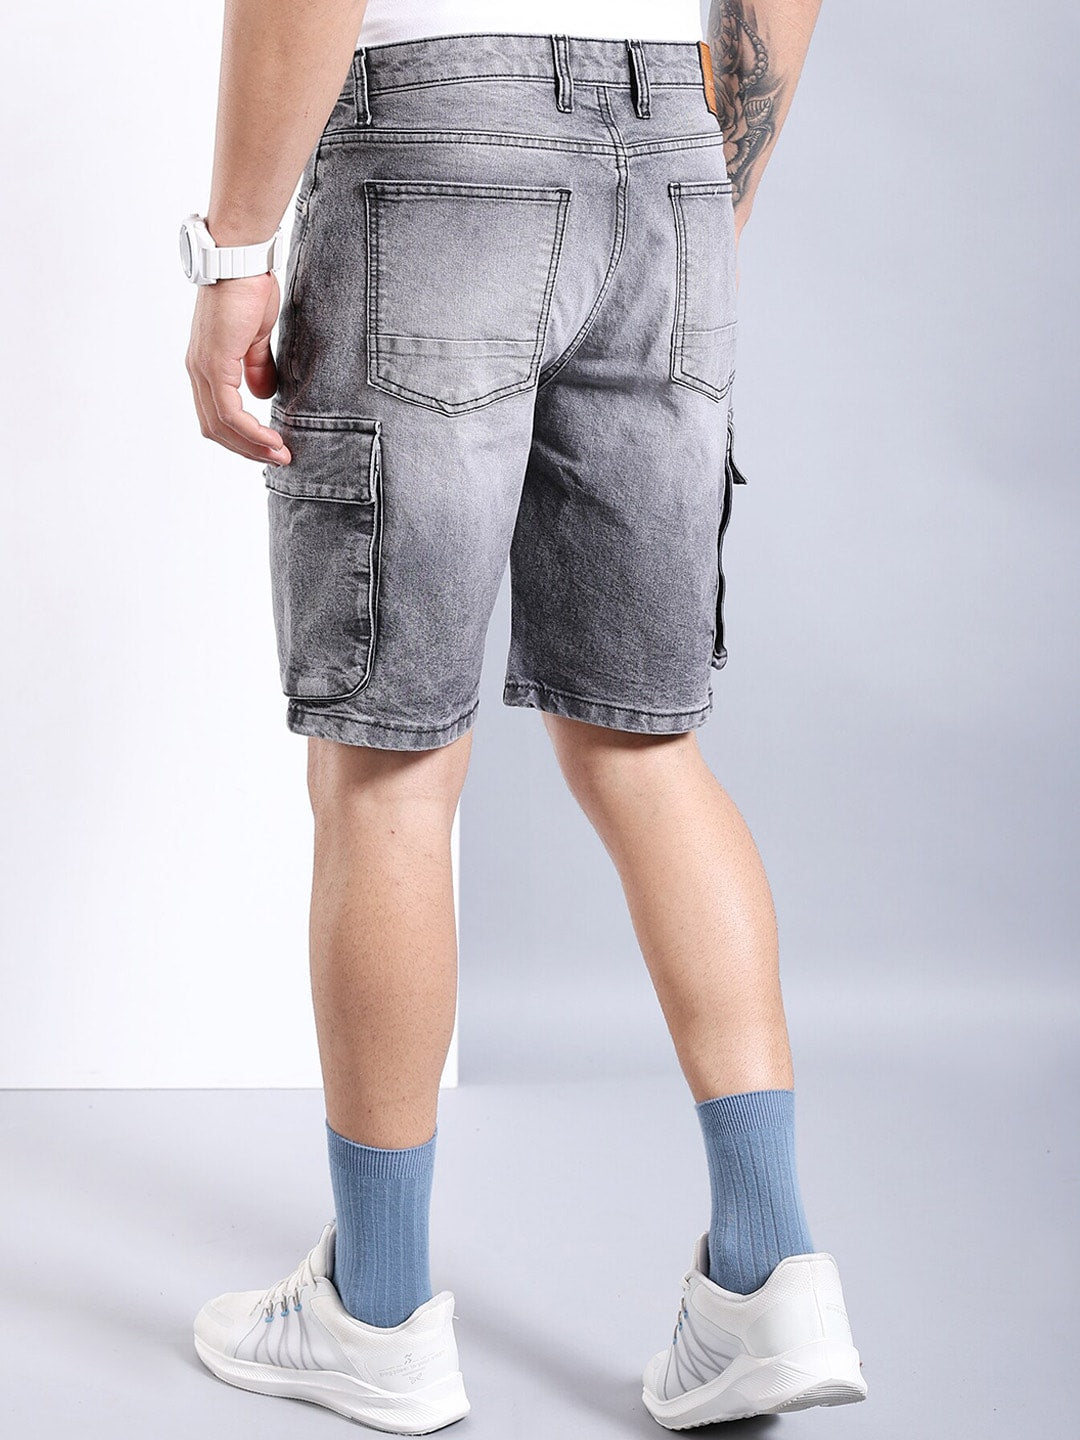 Shop Men Printed Shorts Online.